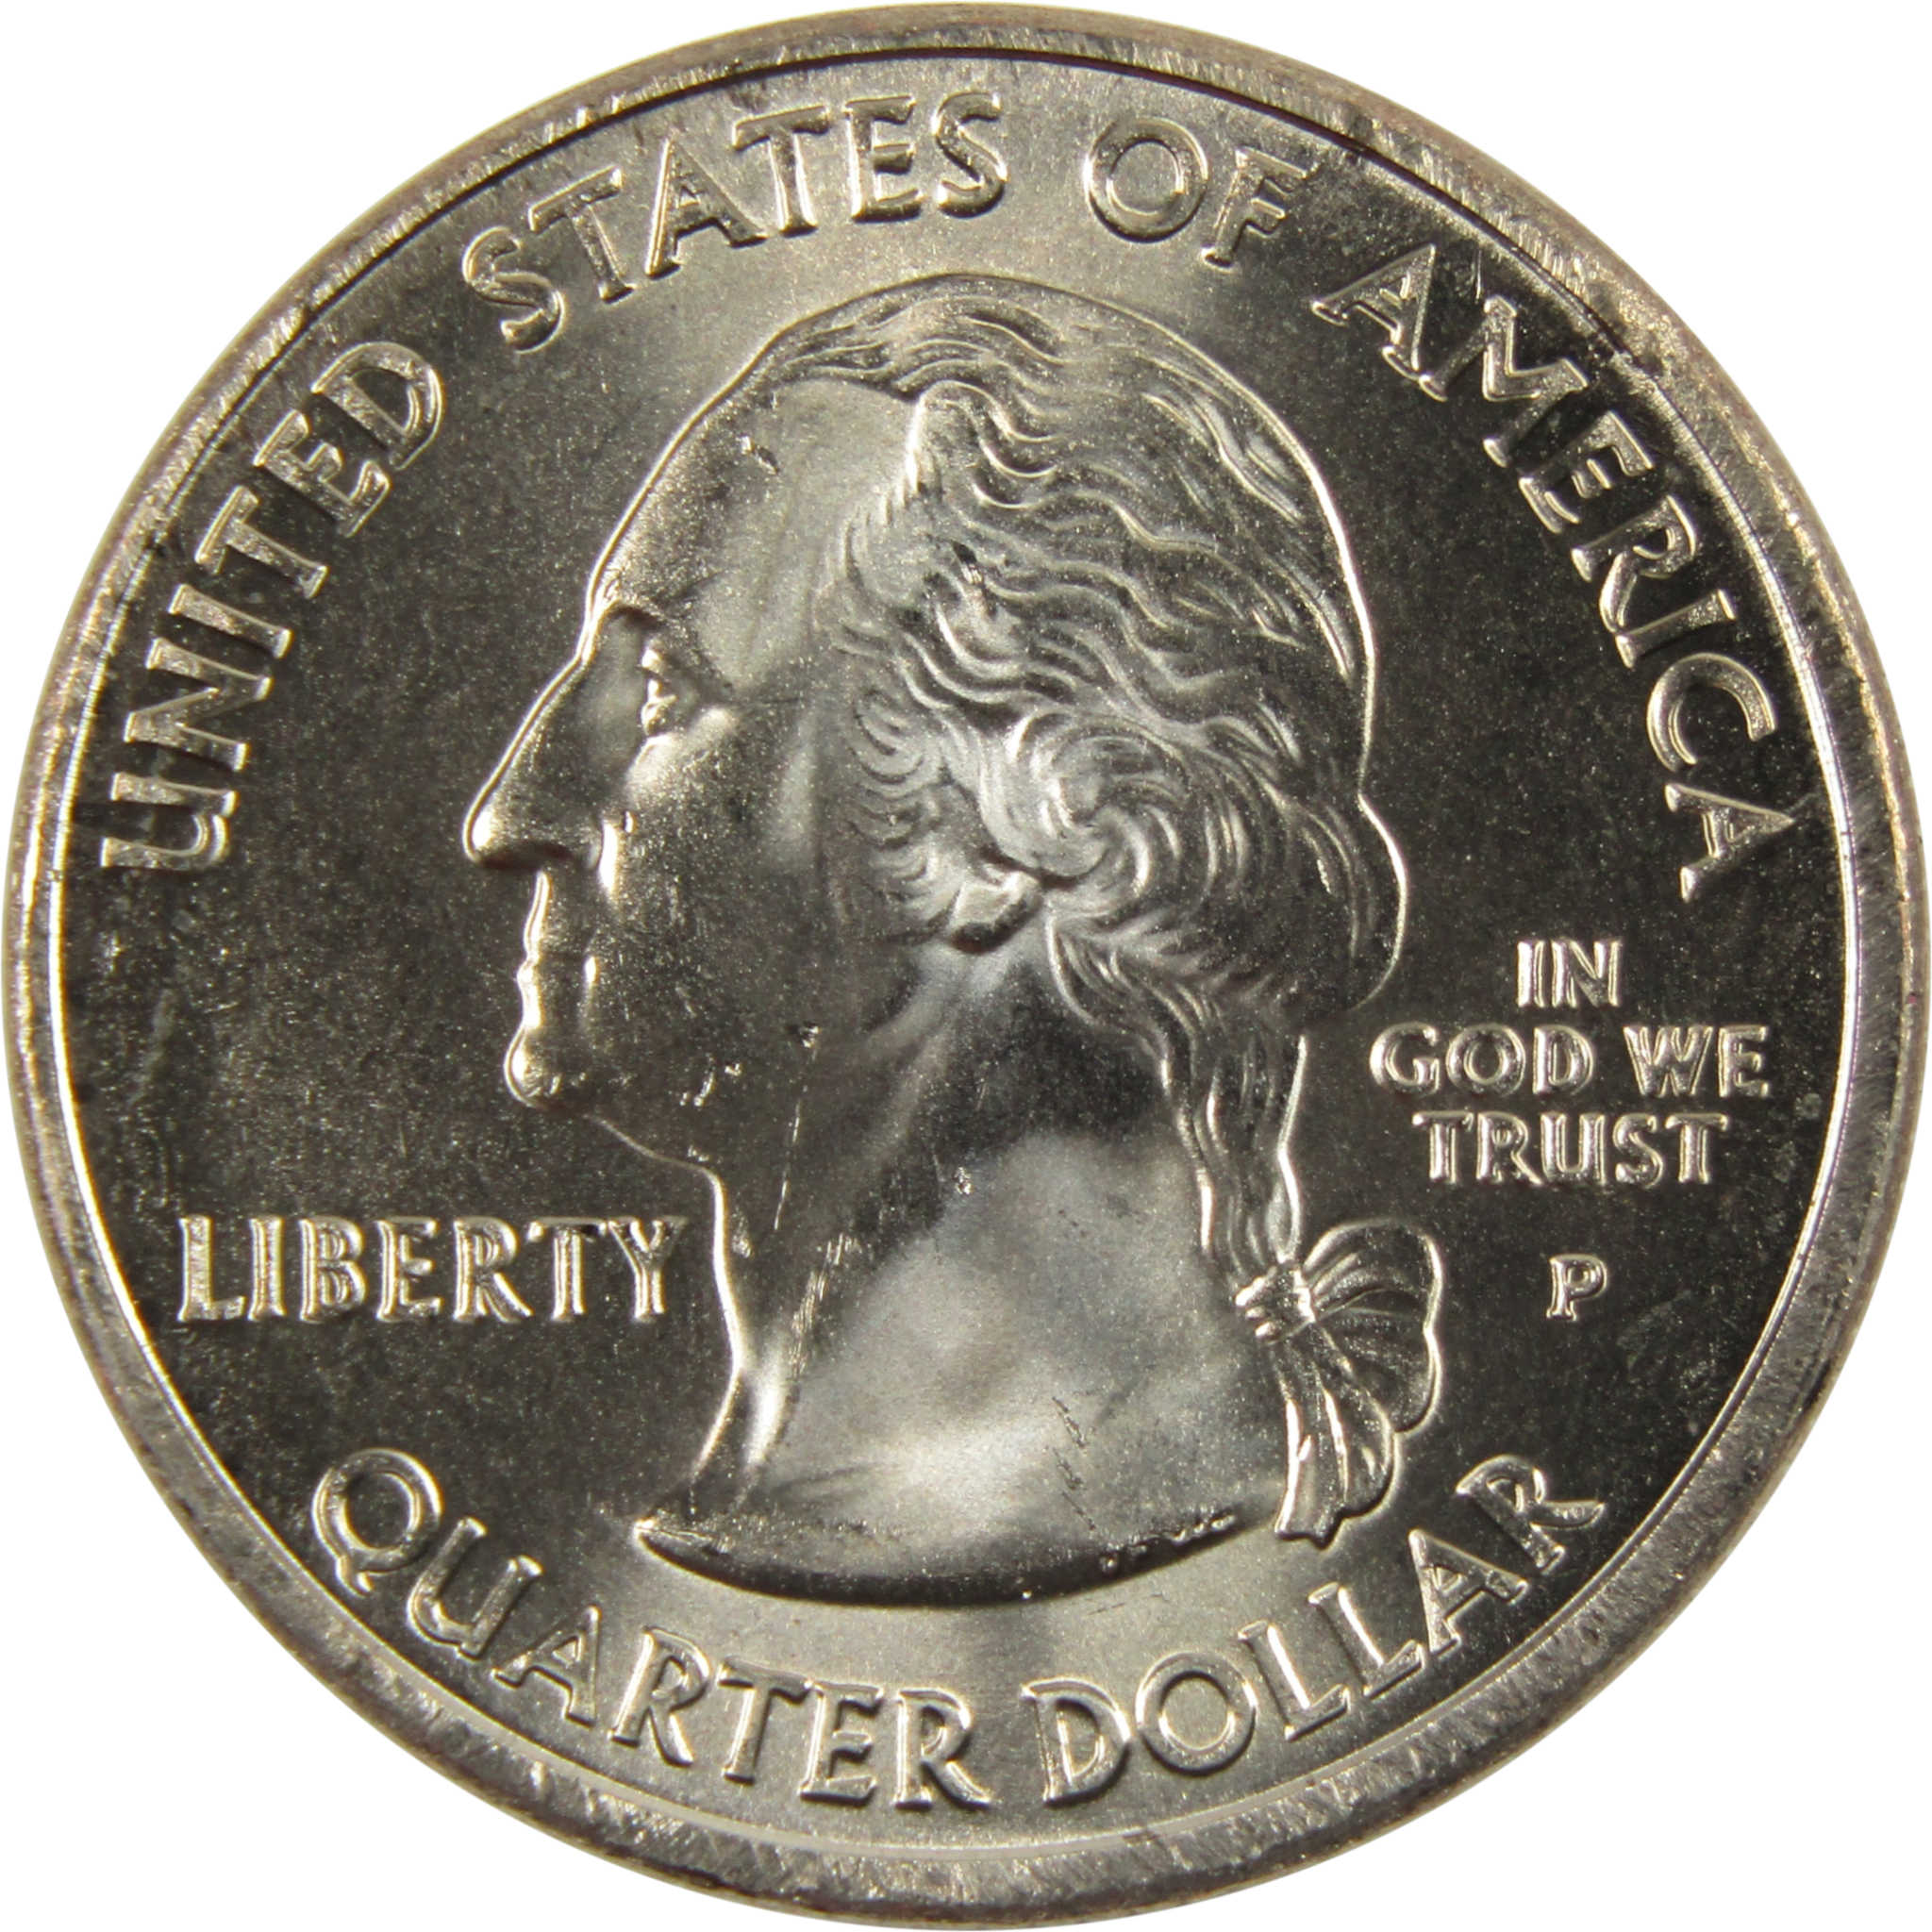 2007 P Washington State Quarter BU Uncirculated Clad 25c Coin